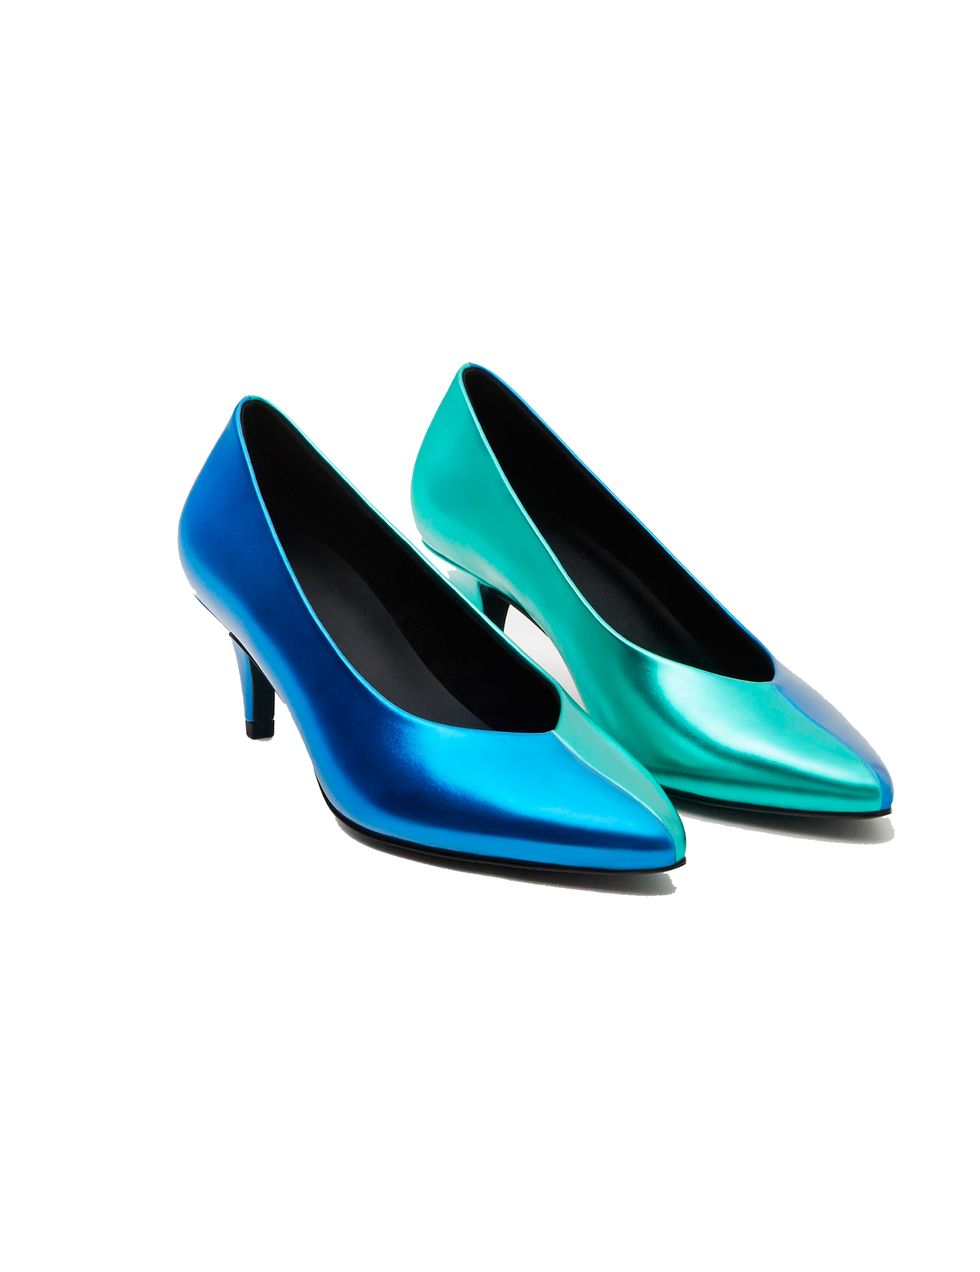 Footwear, Turquoise, Blue, Shoe, Green, Cobalt blue, Teal, Aqua, High heels, Court shoe, 